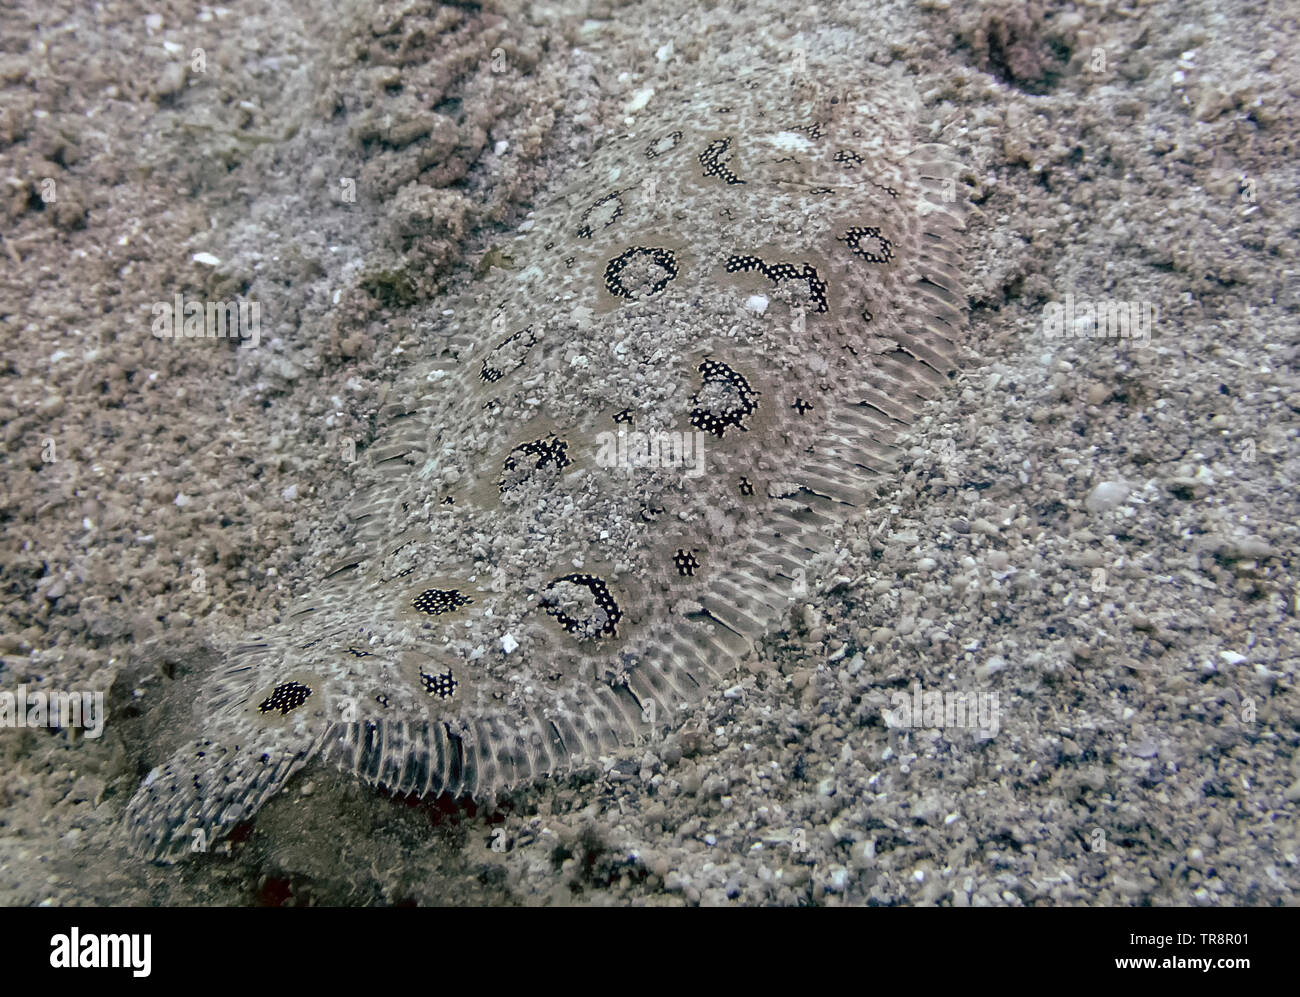 Angler Flatfish (Asterorhombus fijiensis) blending in to the ocean floor Stock Photo